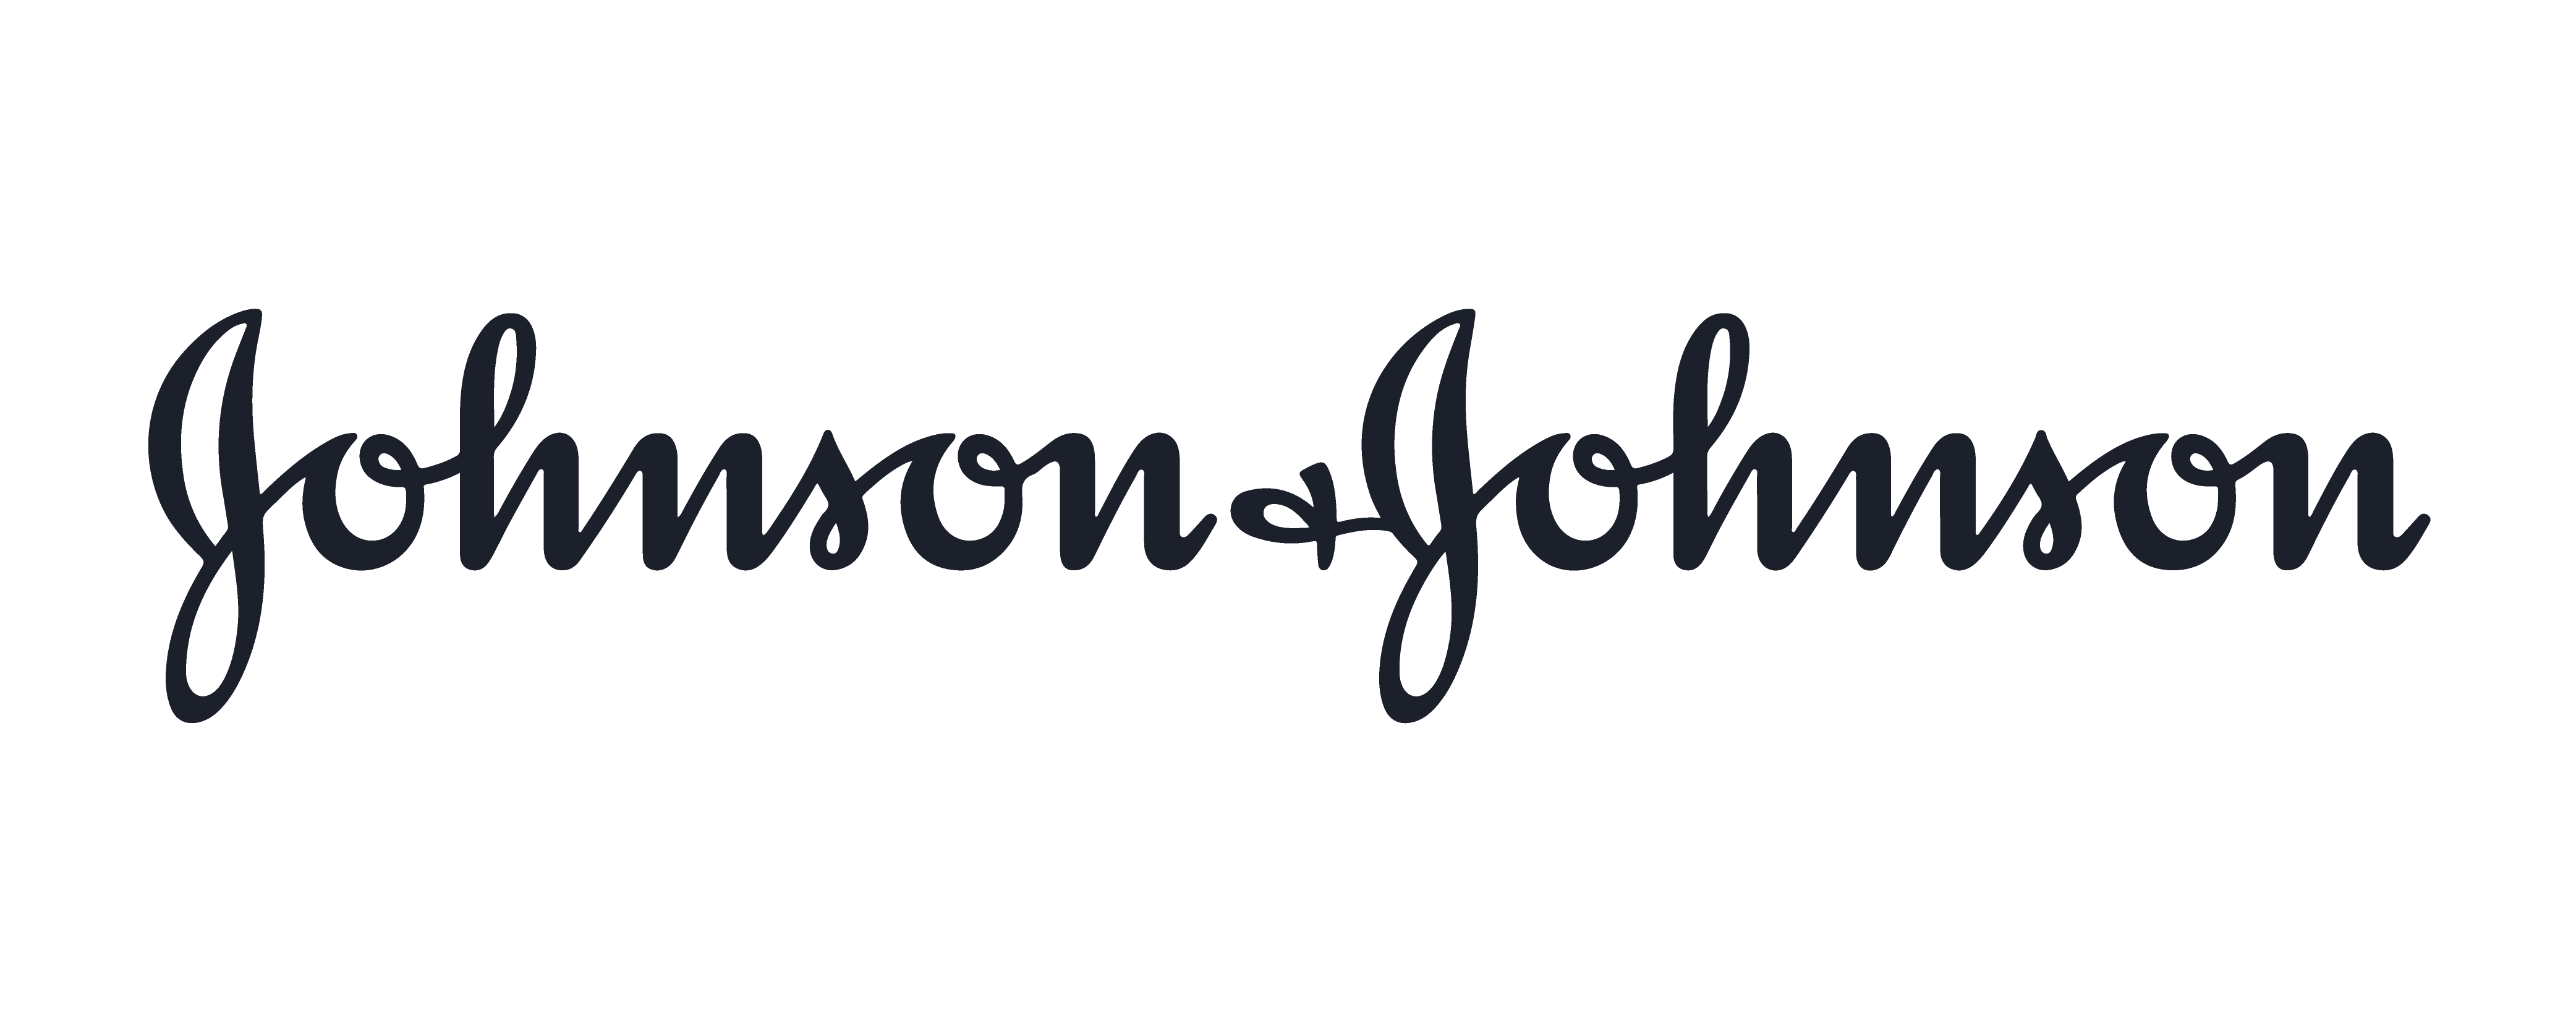 johnson and johnson logo